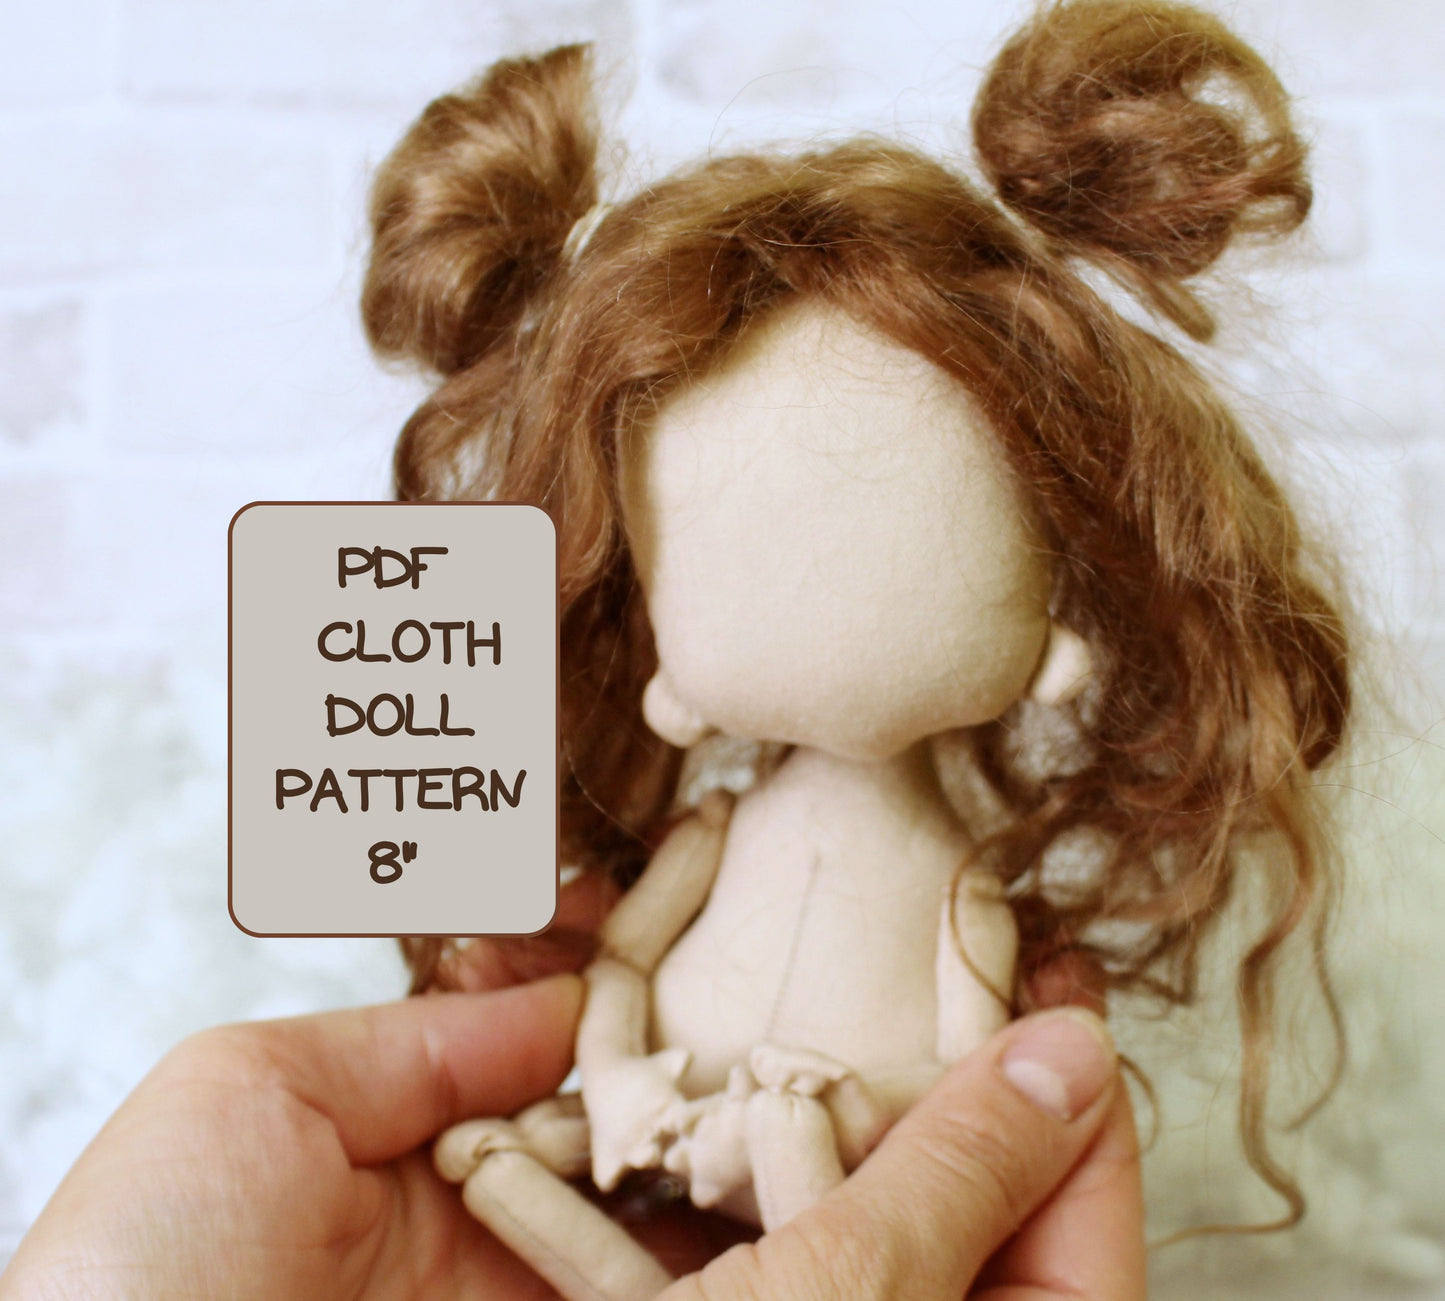 Cloth Doll Pattern 8", Sewing Tutorial doll